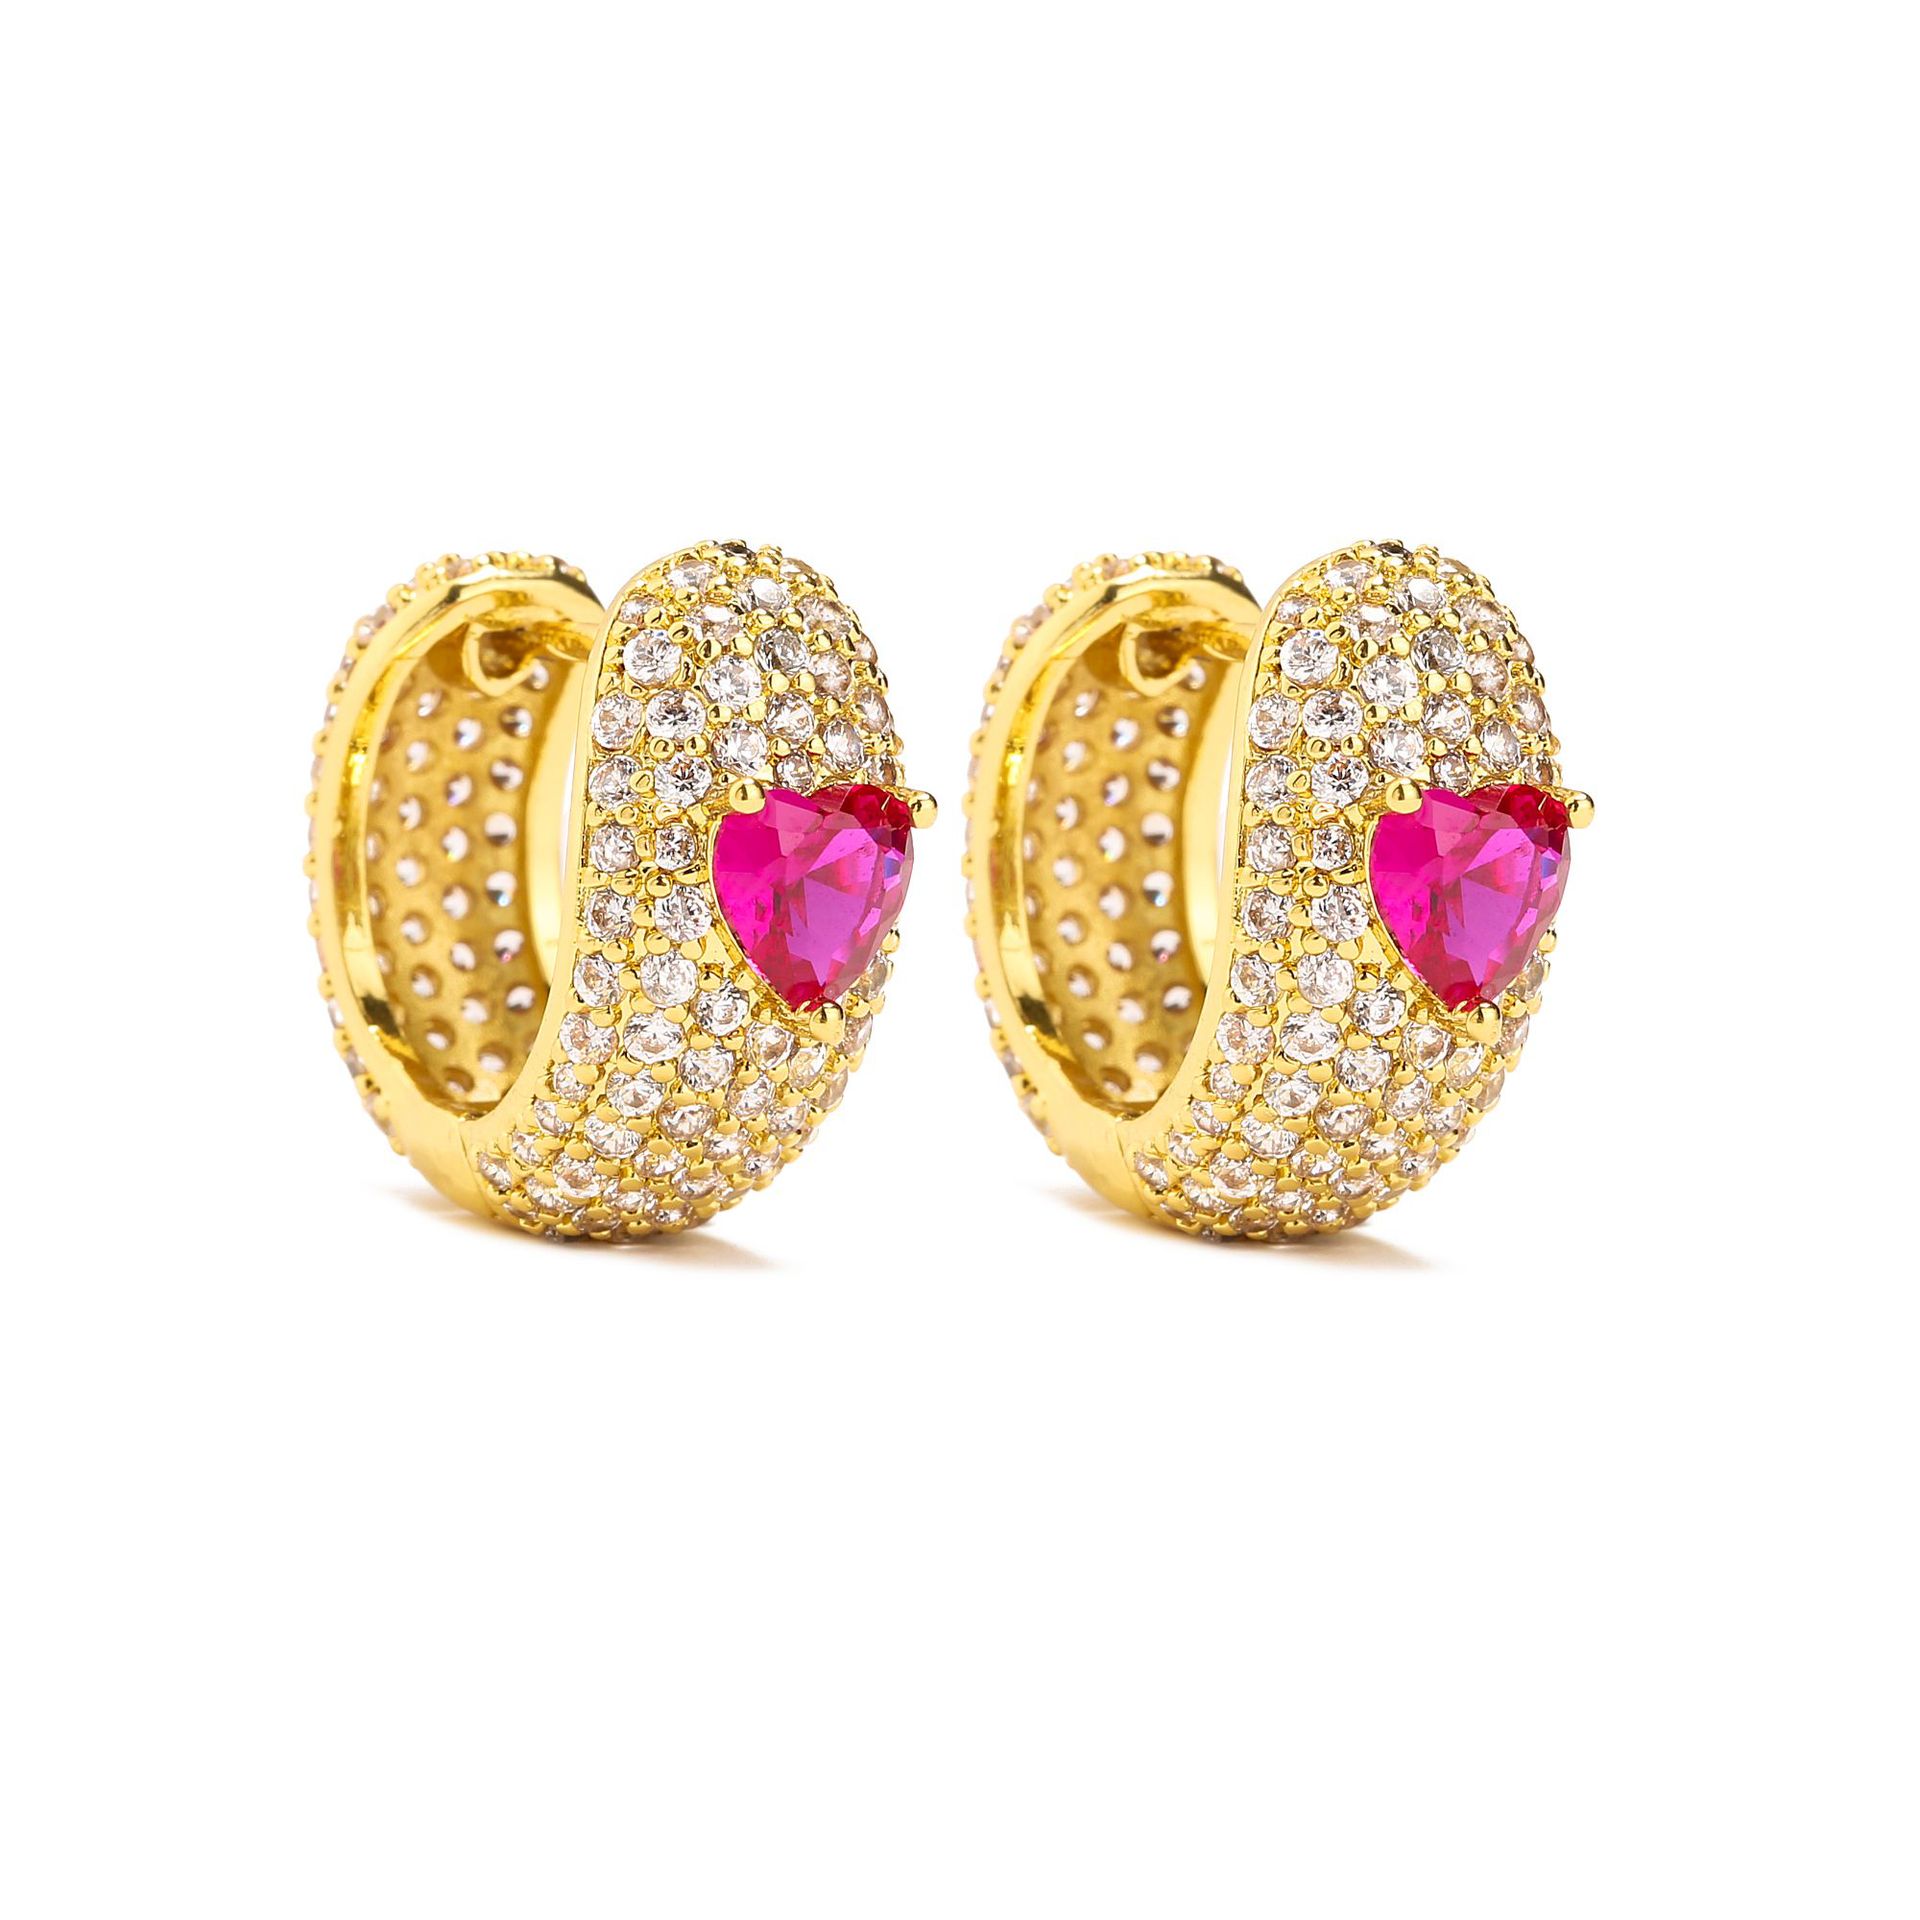 2:Gold Rose Love Earrings 1 pair